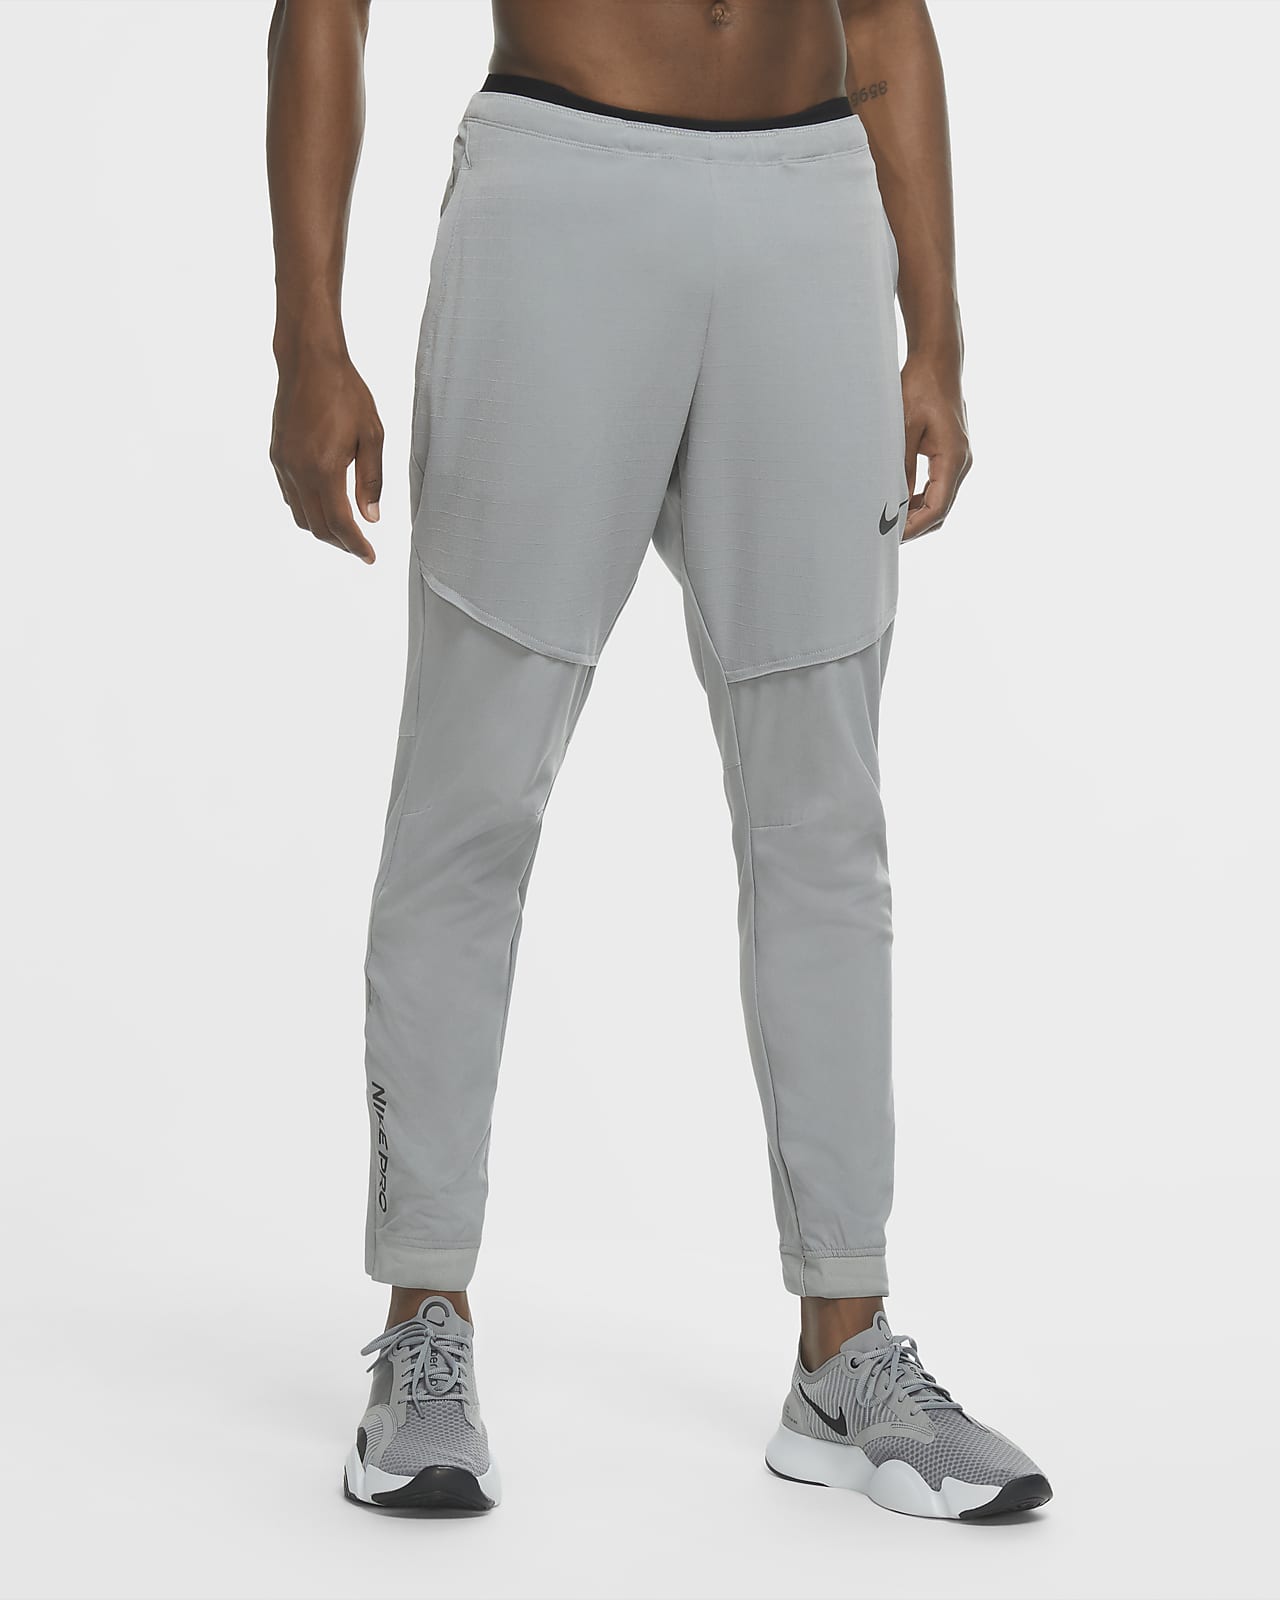 Pantaloni Nike Pro Flex Rep - Uomo